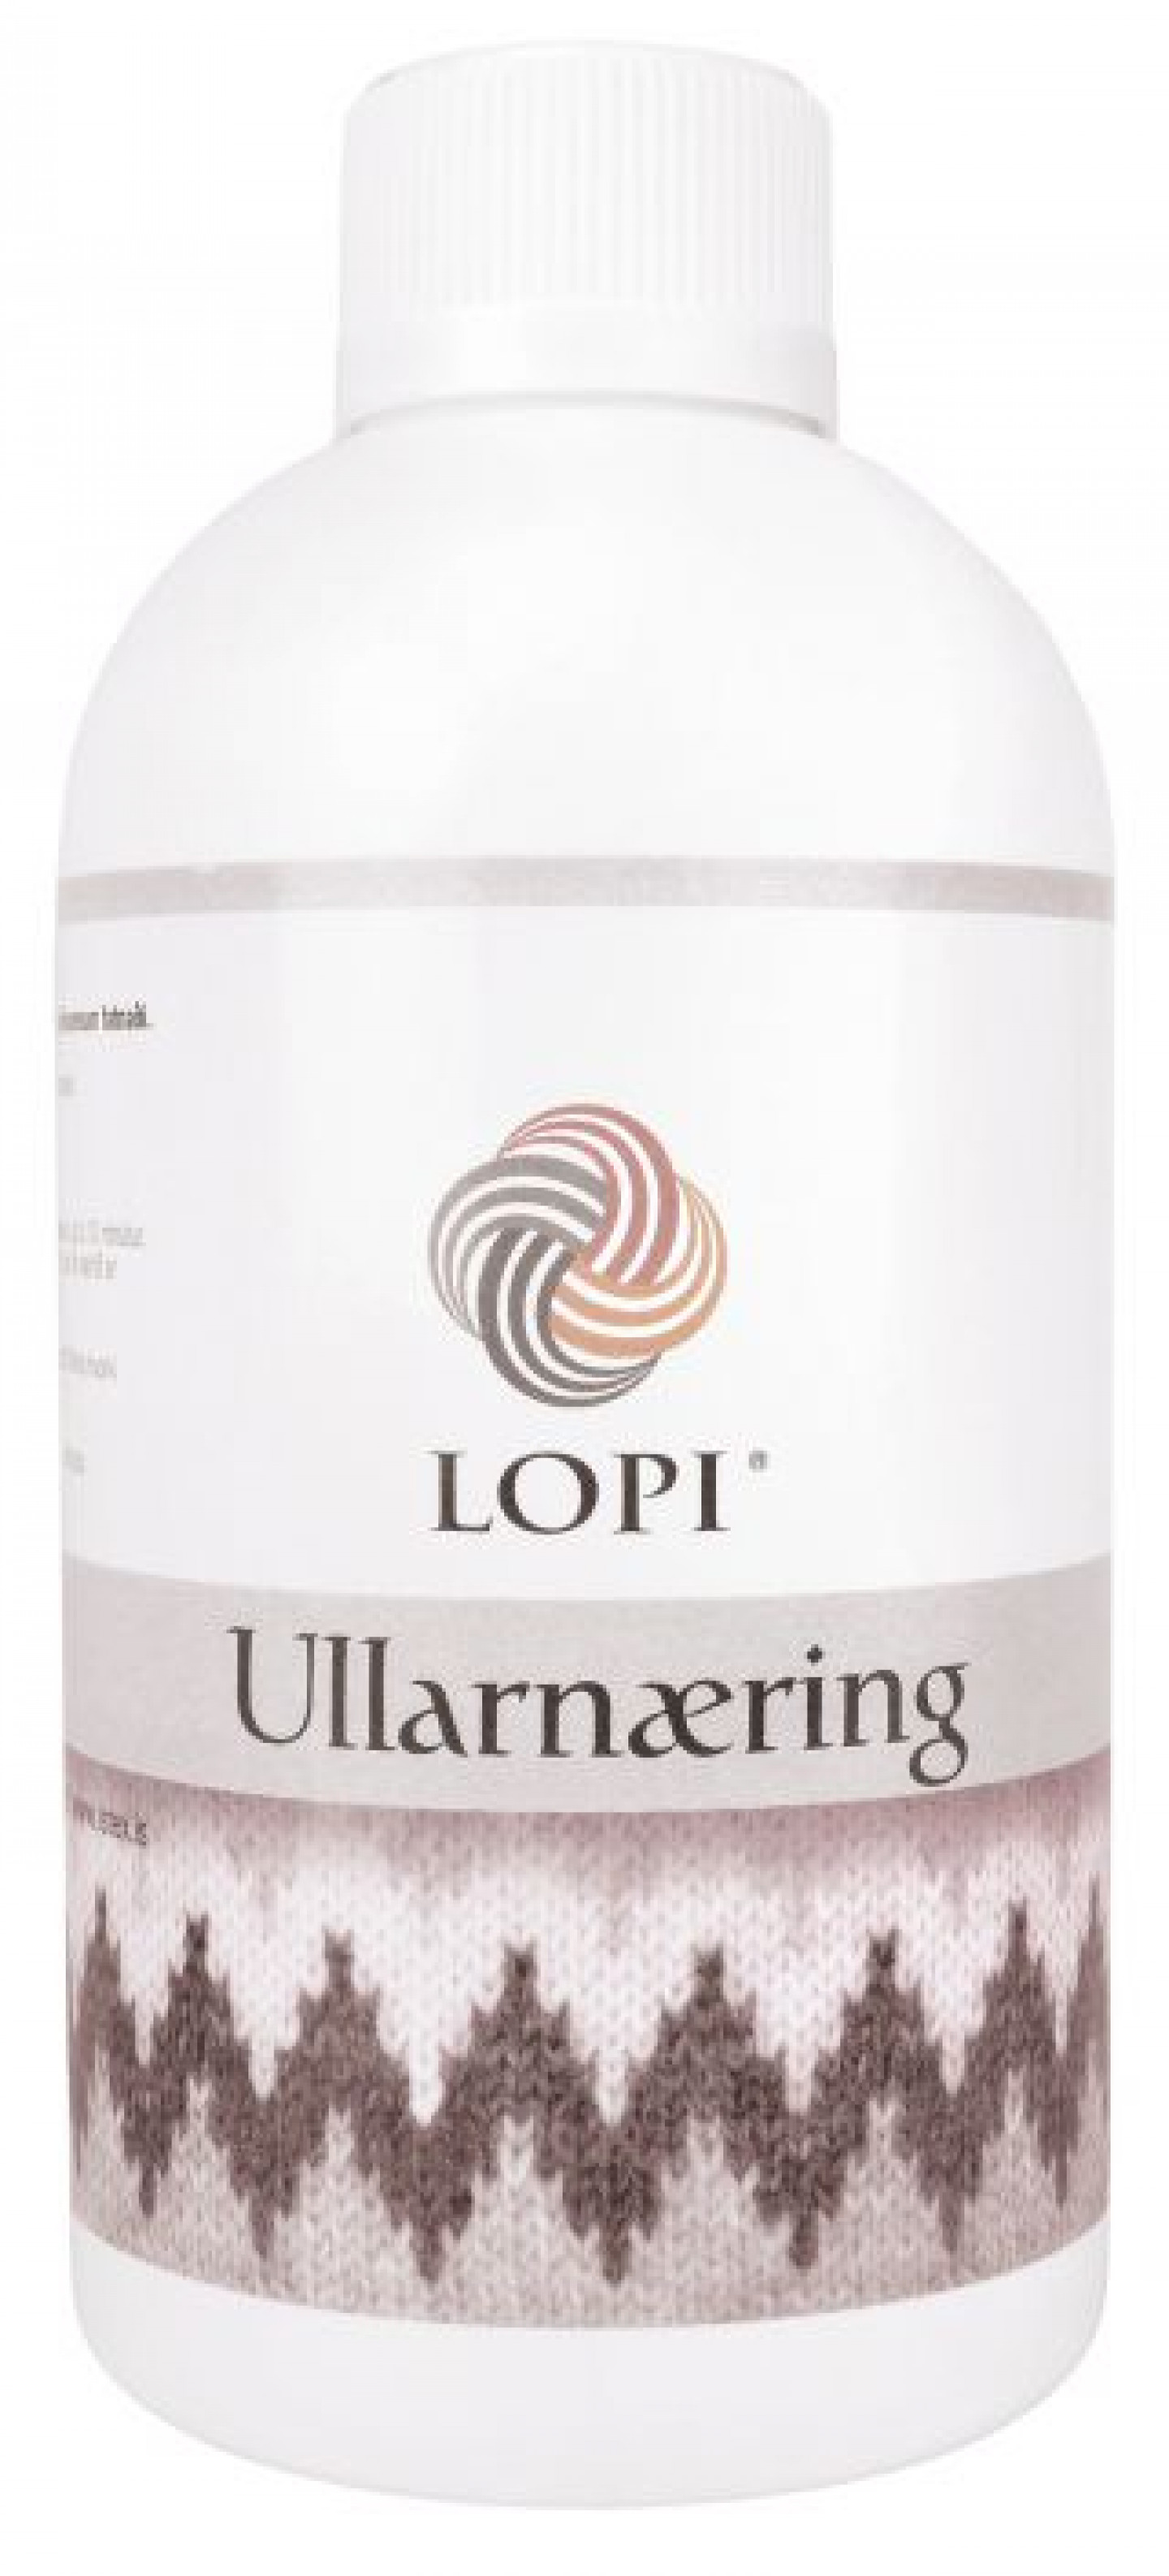 Istex Lopi Ullarnäring - villanhoitoaine